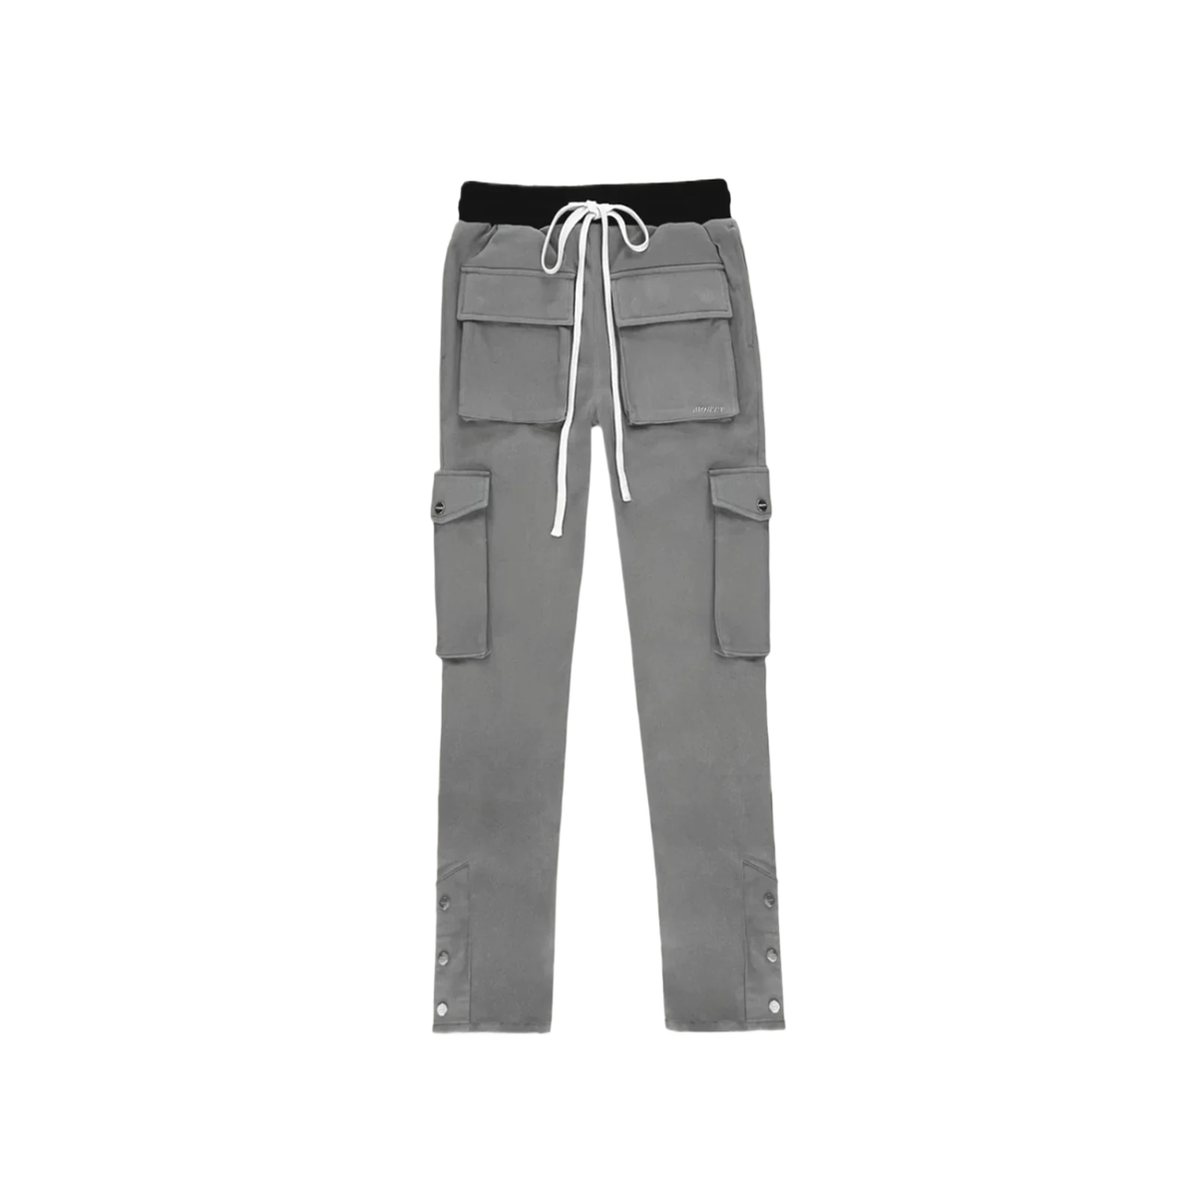 Mouty Grey Cargo Pants